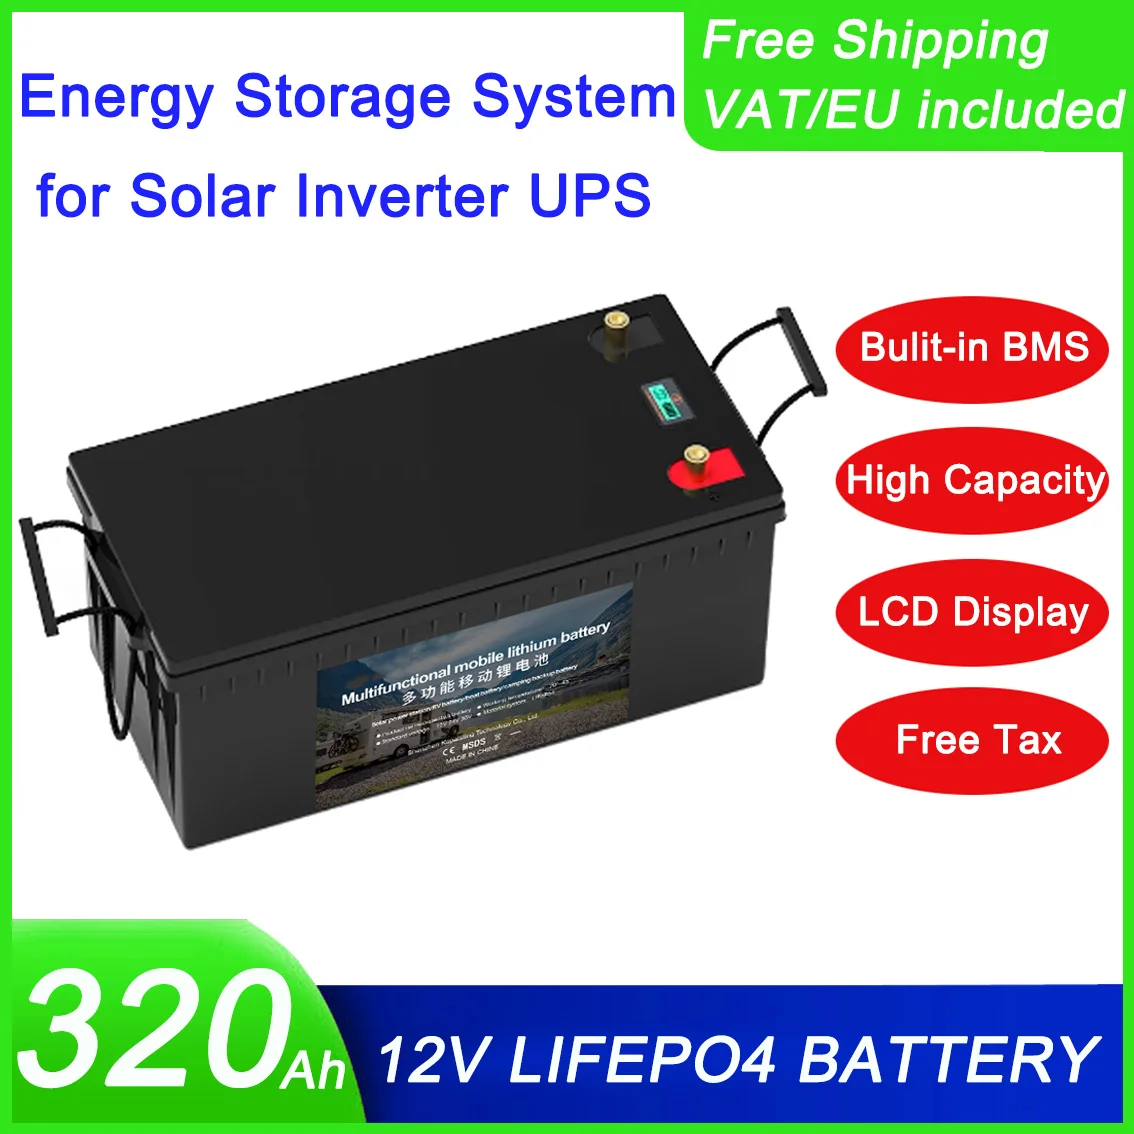 320AH LiFePO4 Battery RV Home Energy Storage System 280AH 350AH 12V Large Capacity Emergency Backup Power for Solar Inverter UPS